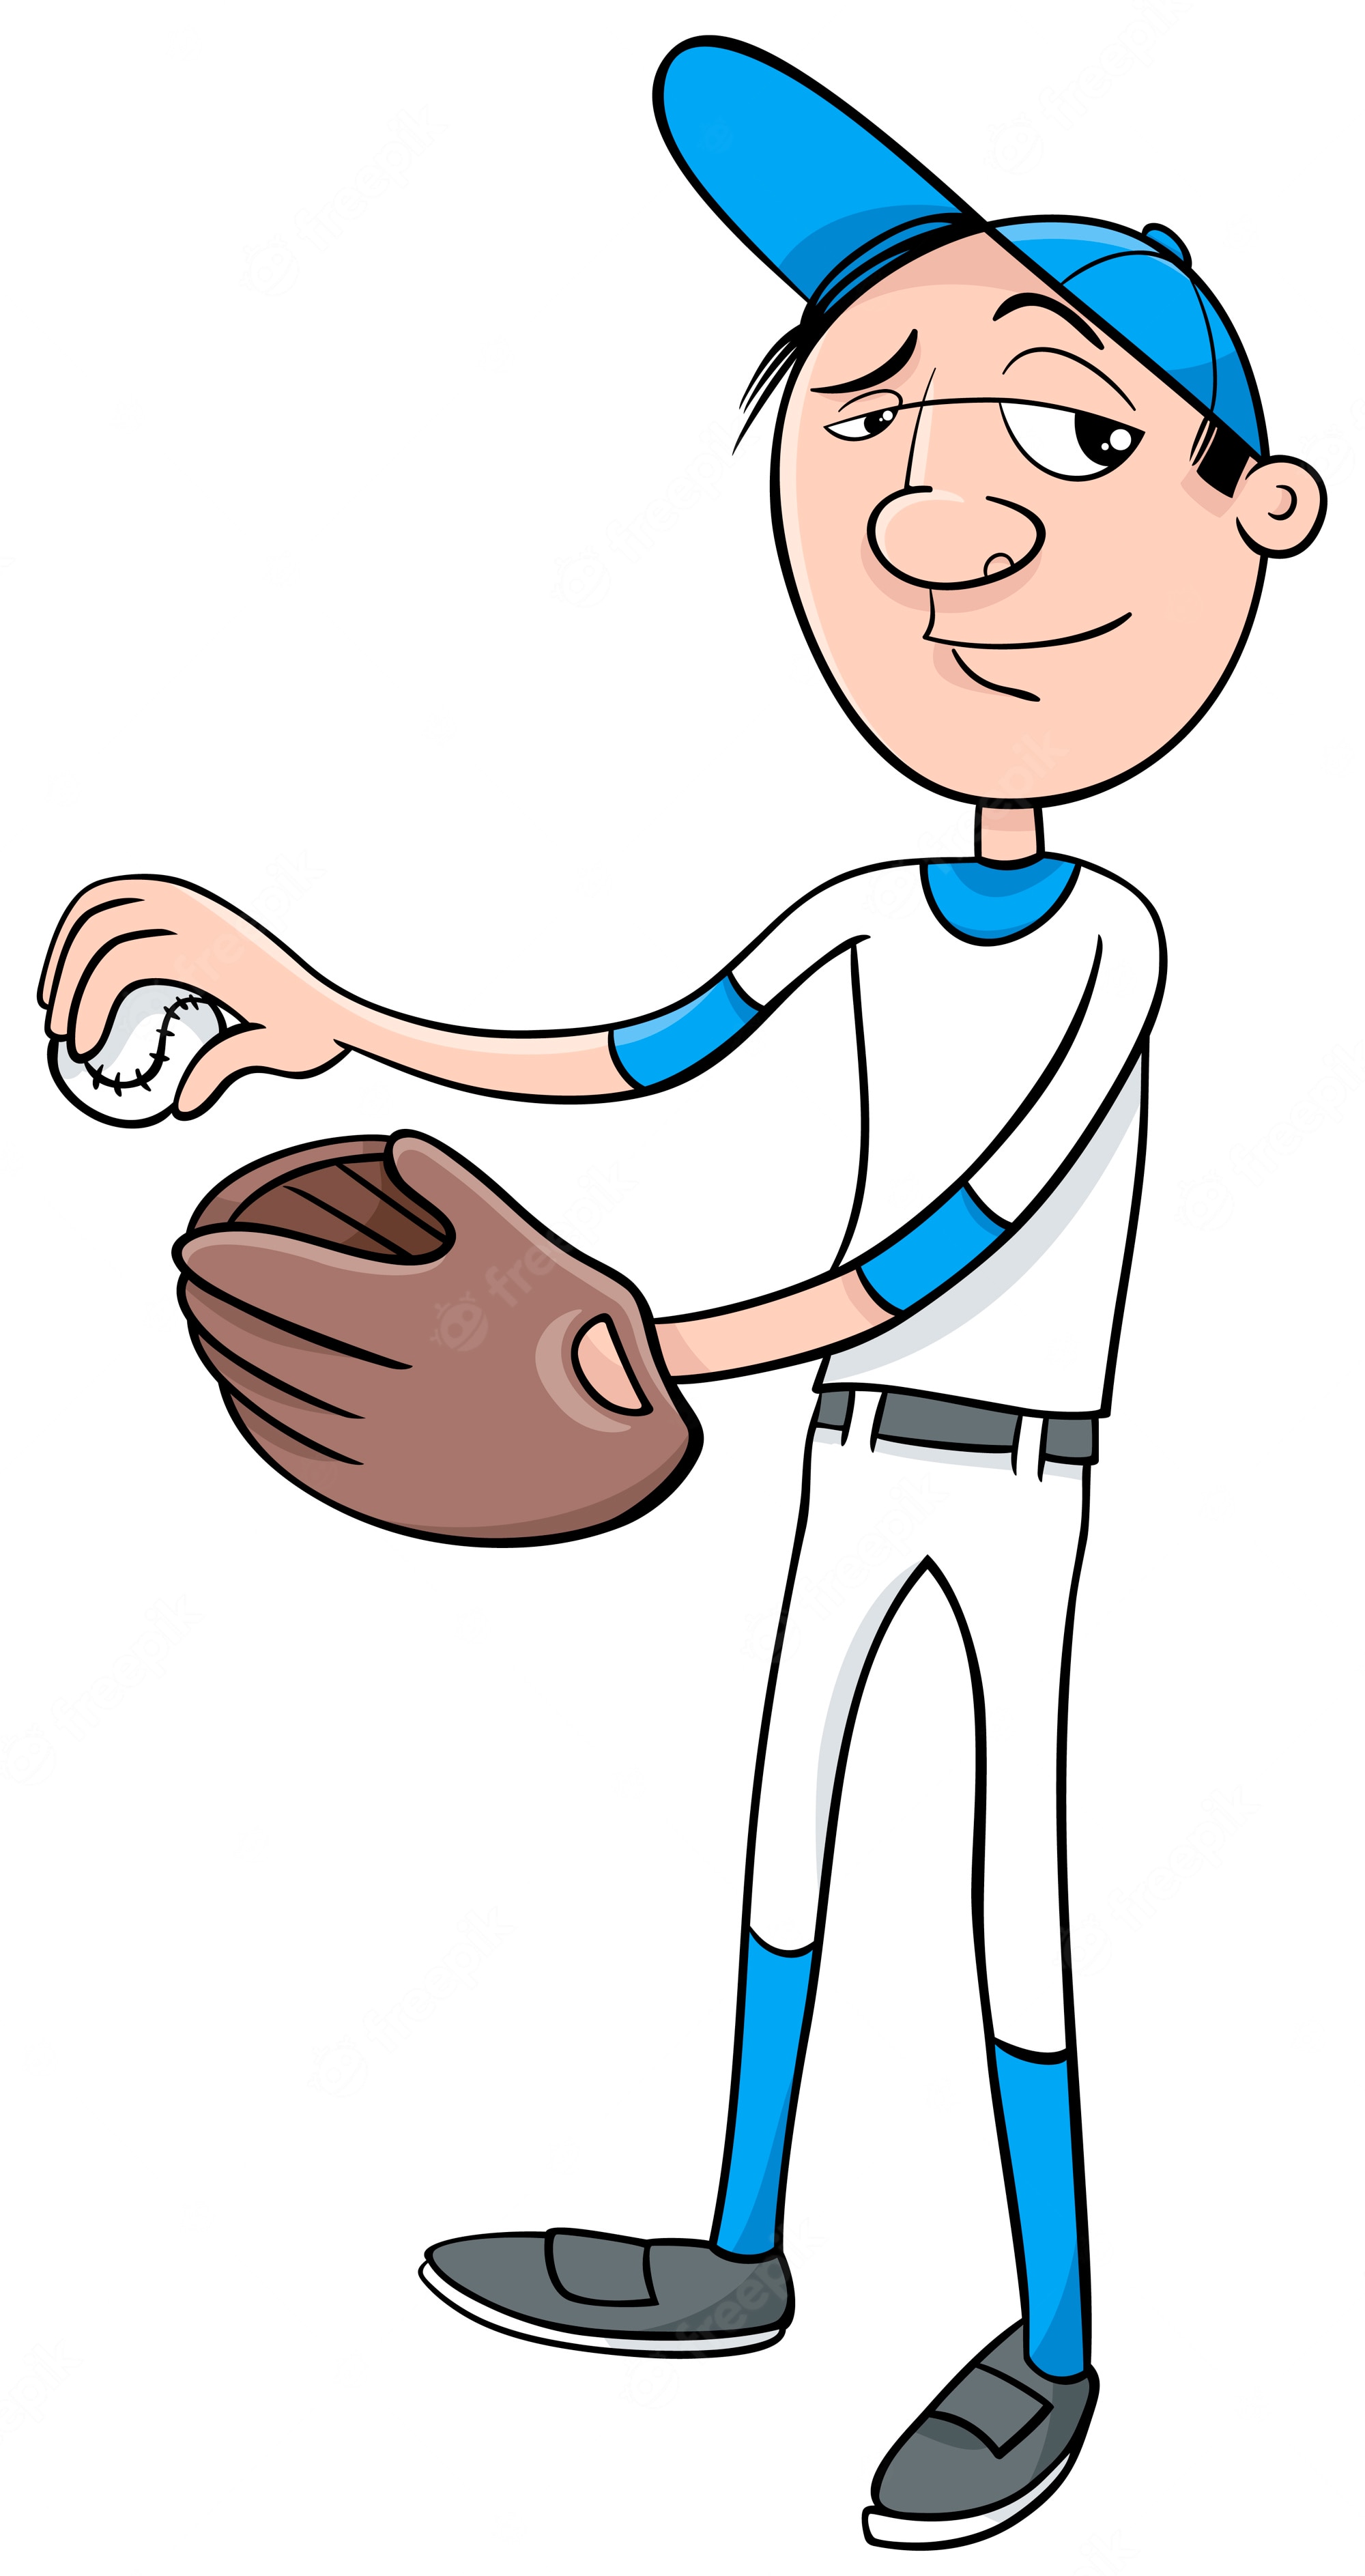 Baseball Player Cartoon Image